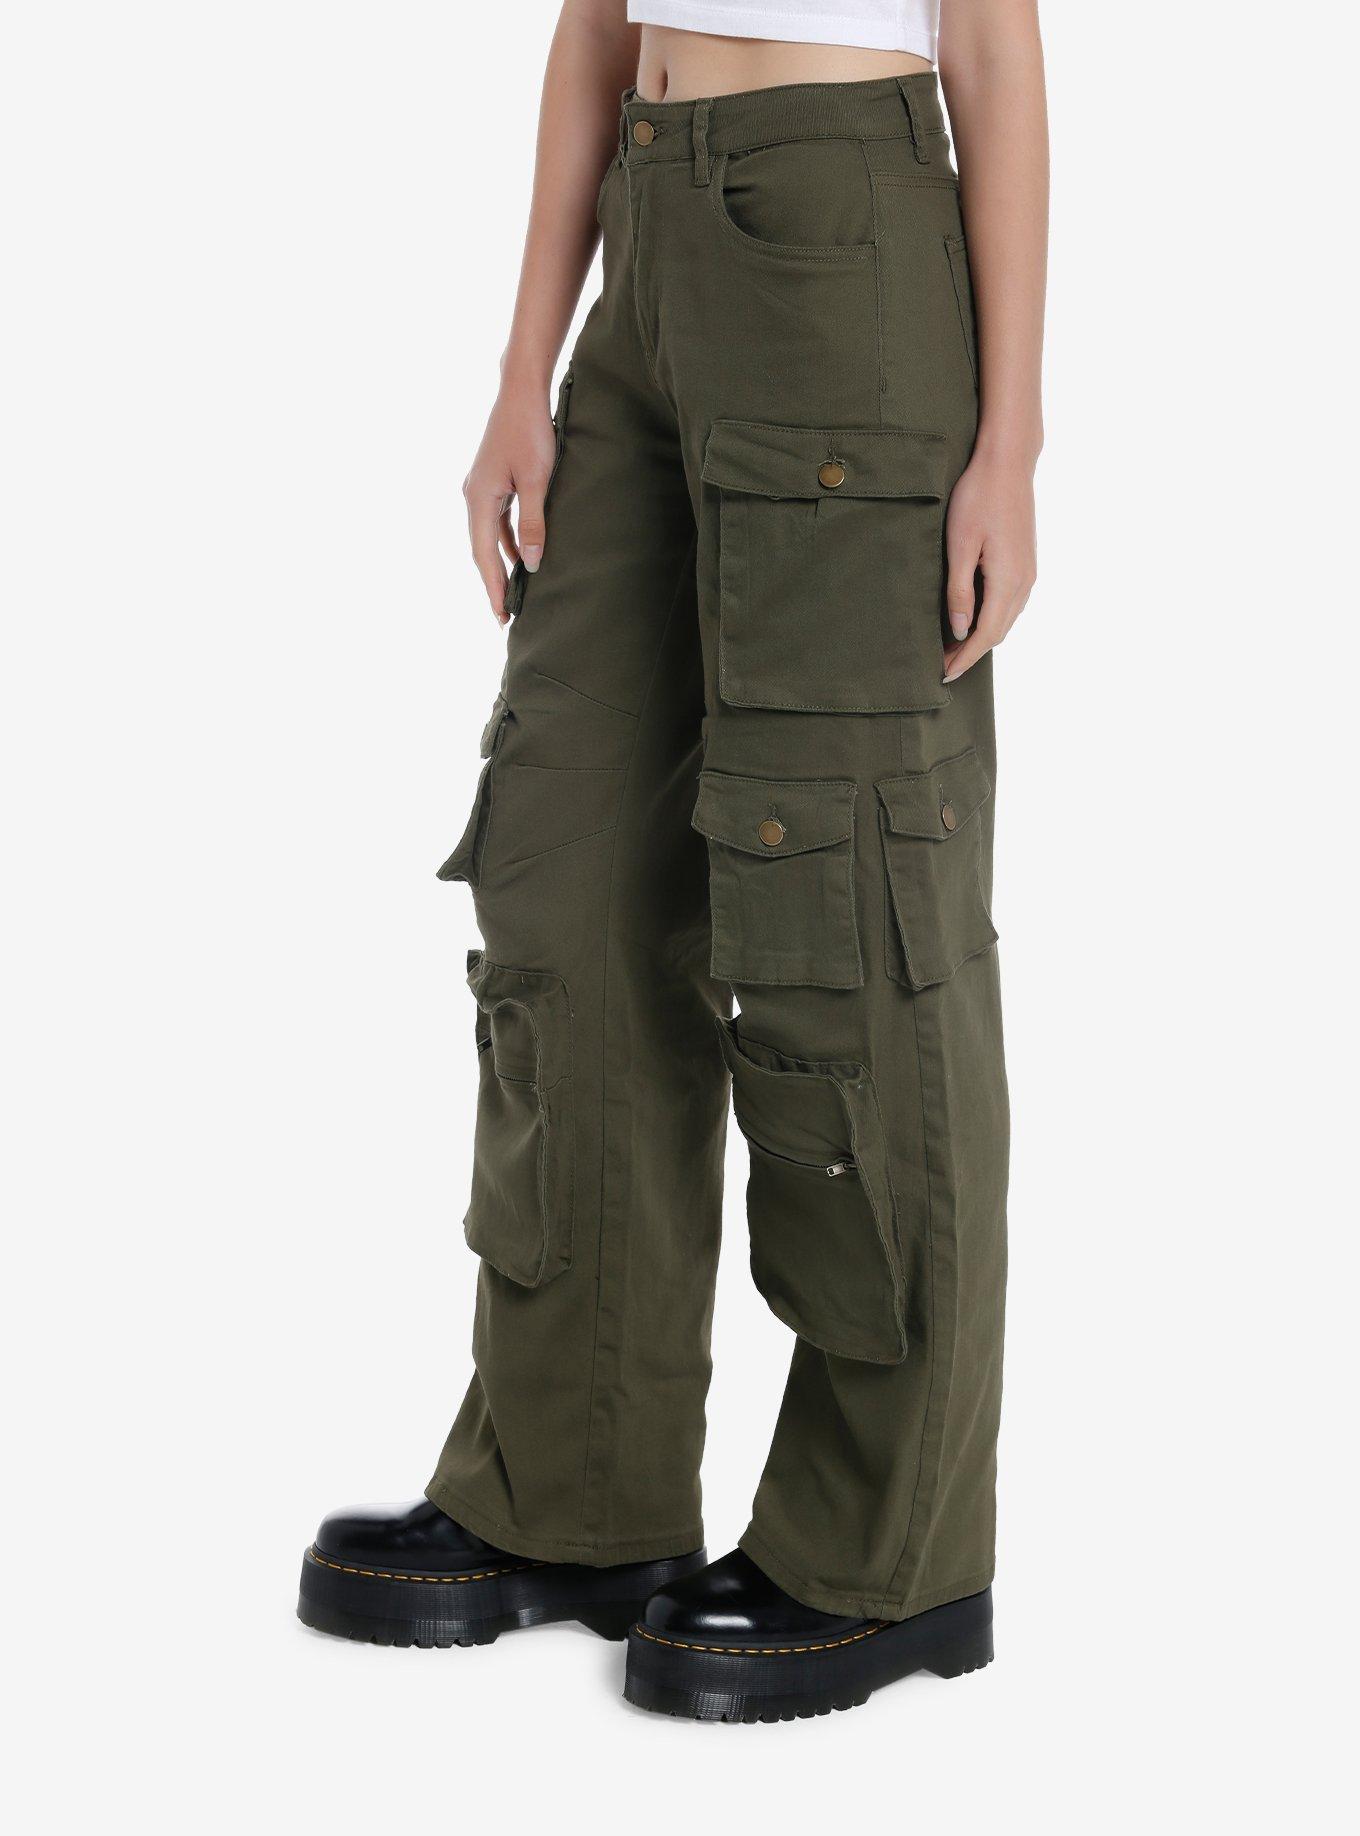 Olive Green Multi-Pocket Girls Cargo Pants, GREEN, alternate